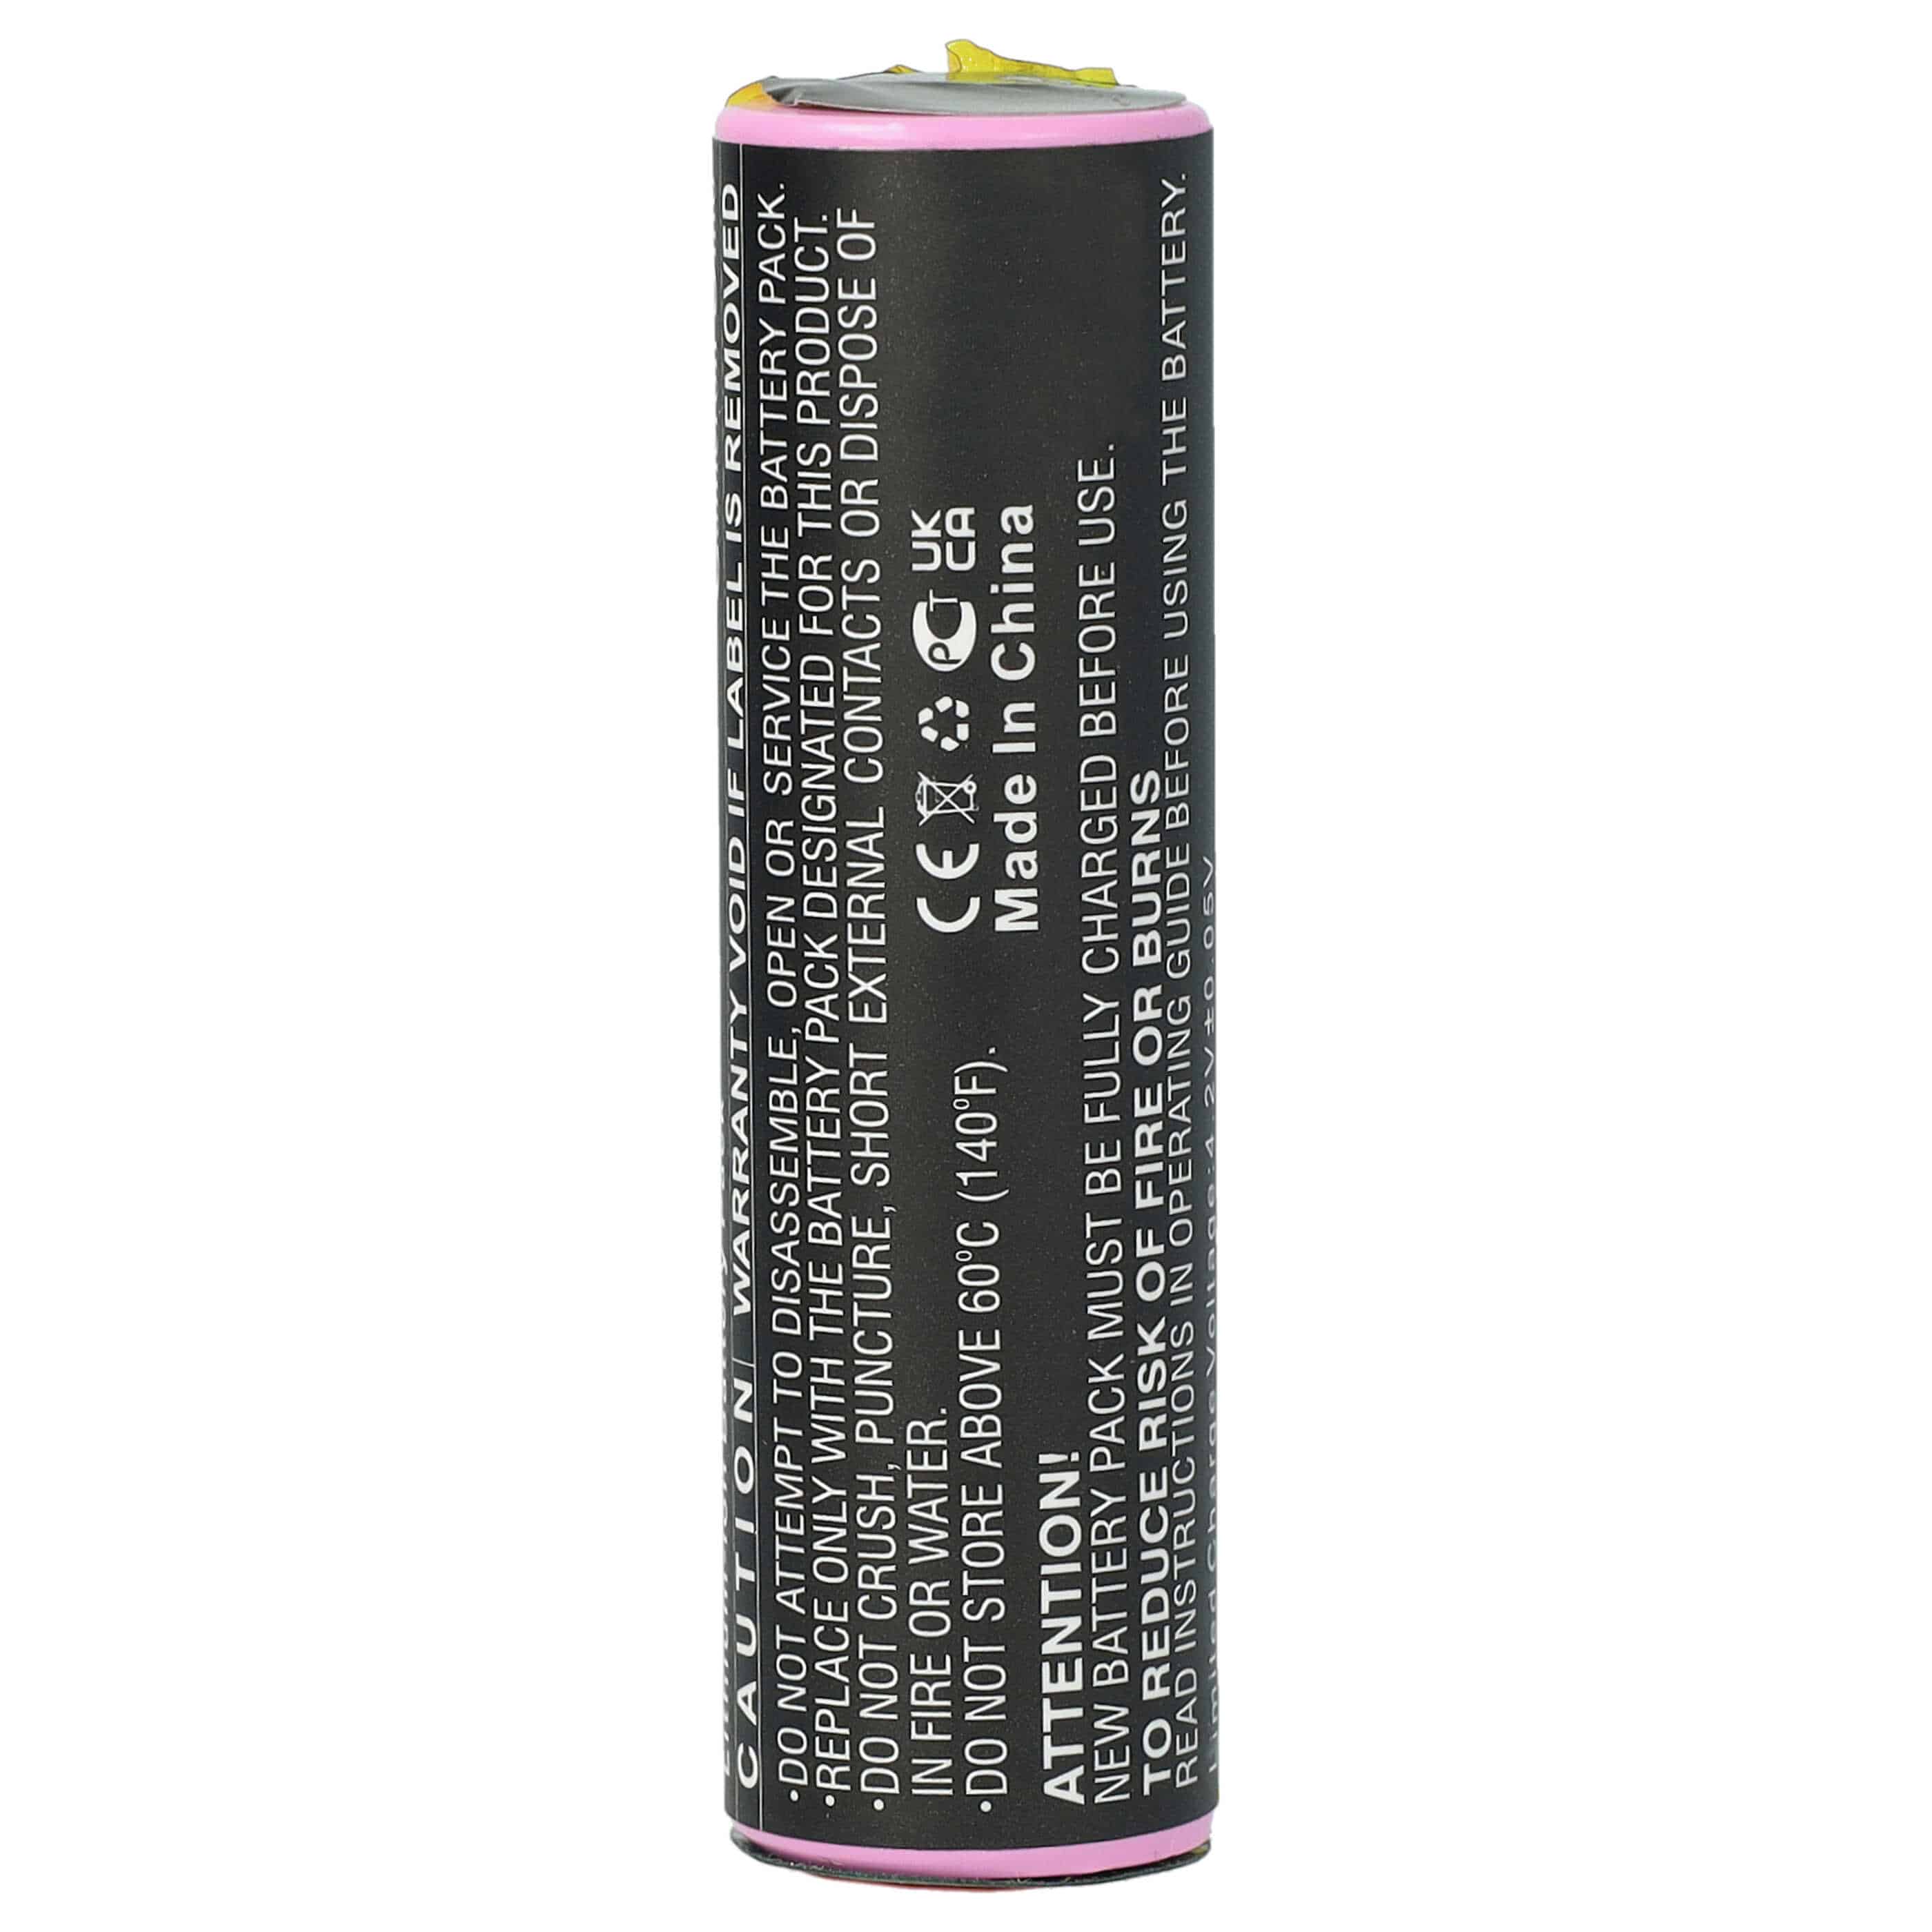 Electric Power Tool Battery Replaces Atika 08829-00.640.00, 08800-000.640.00, 302380 - 2900 mAh, 3.7 V, Li-Ion